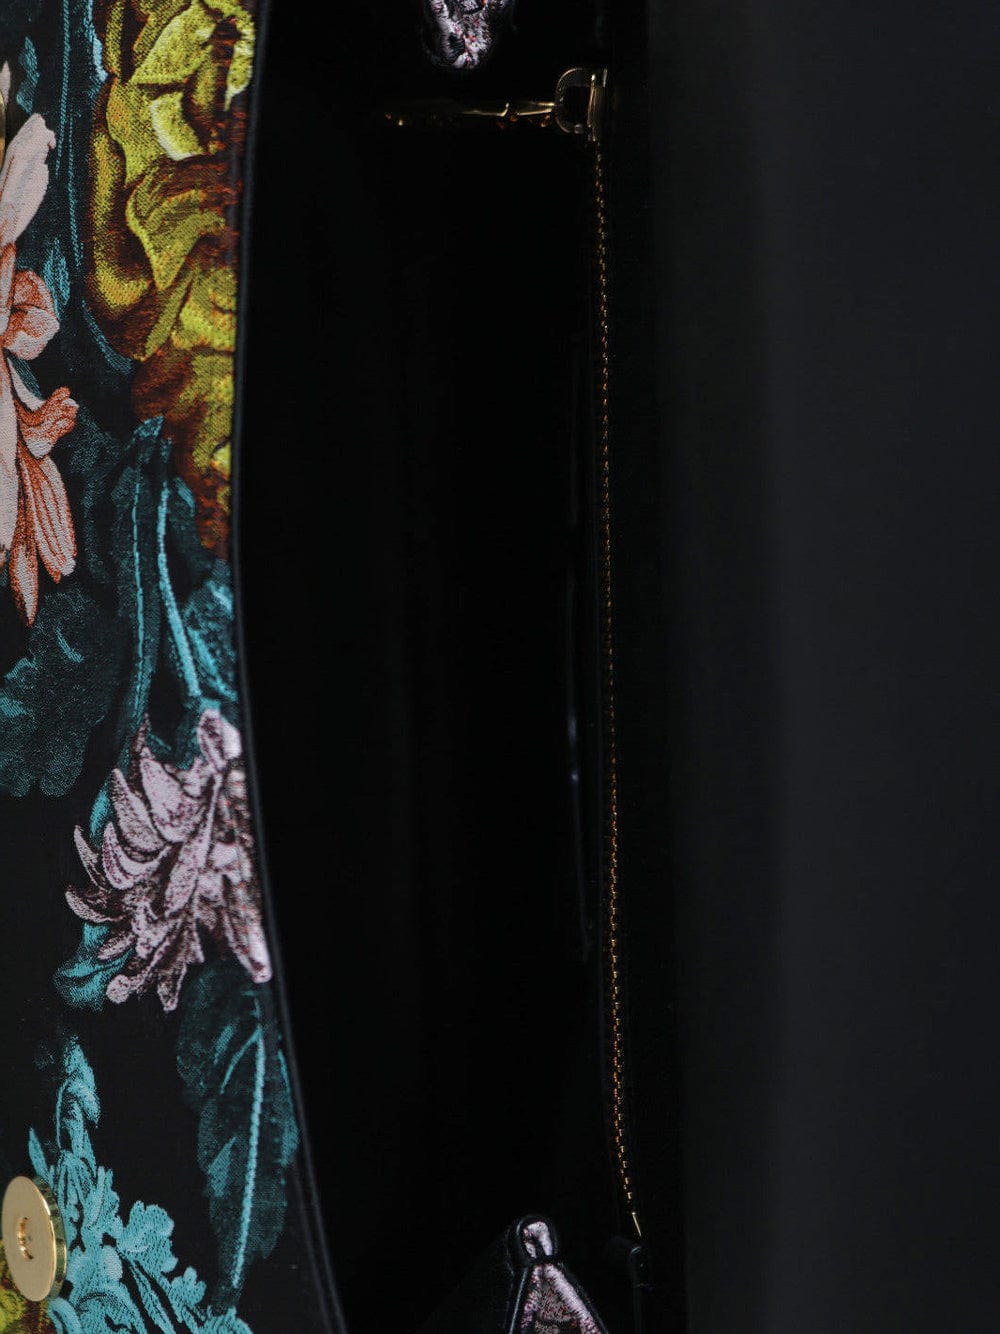 Dolce & Gabbana Medium Sicily Floral Print Tote Bag